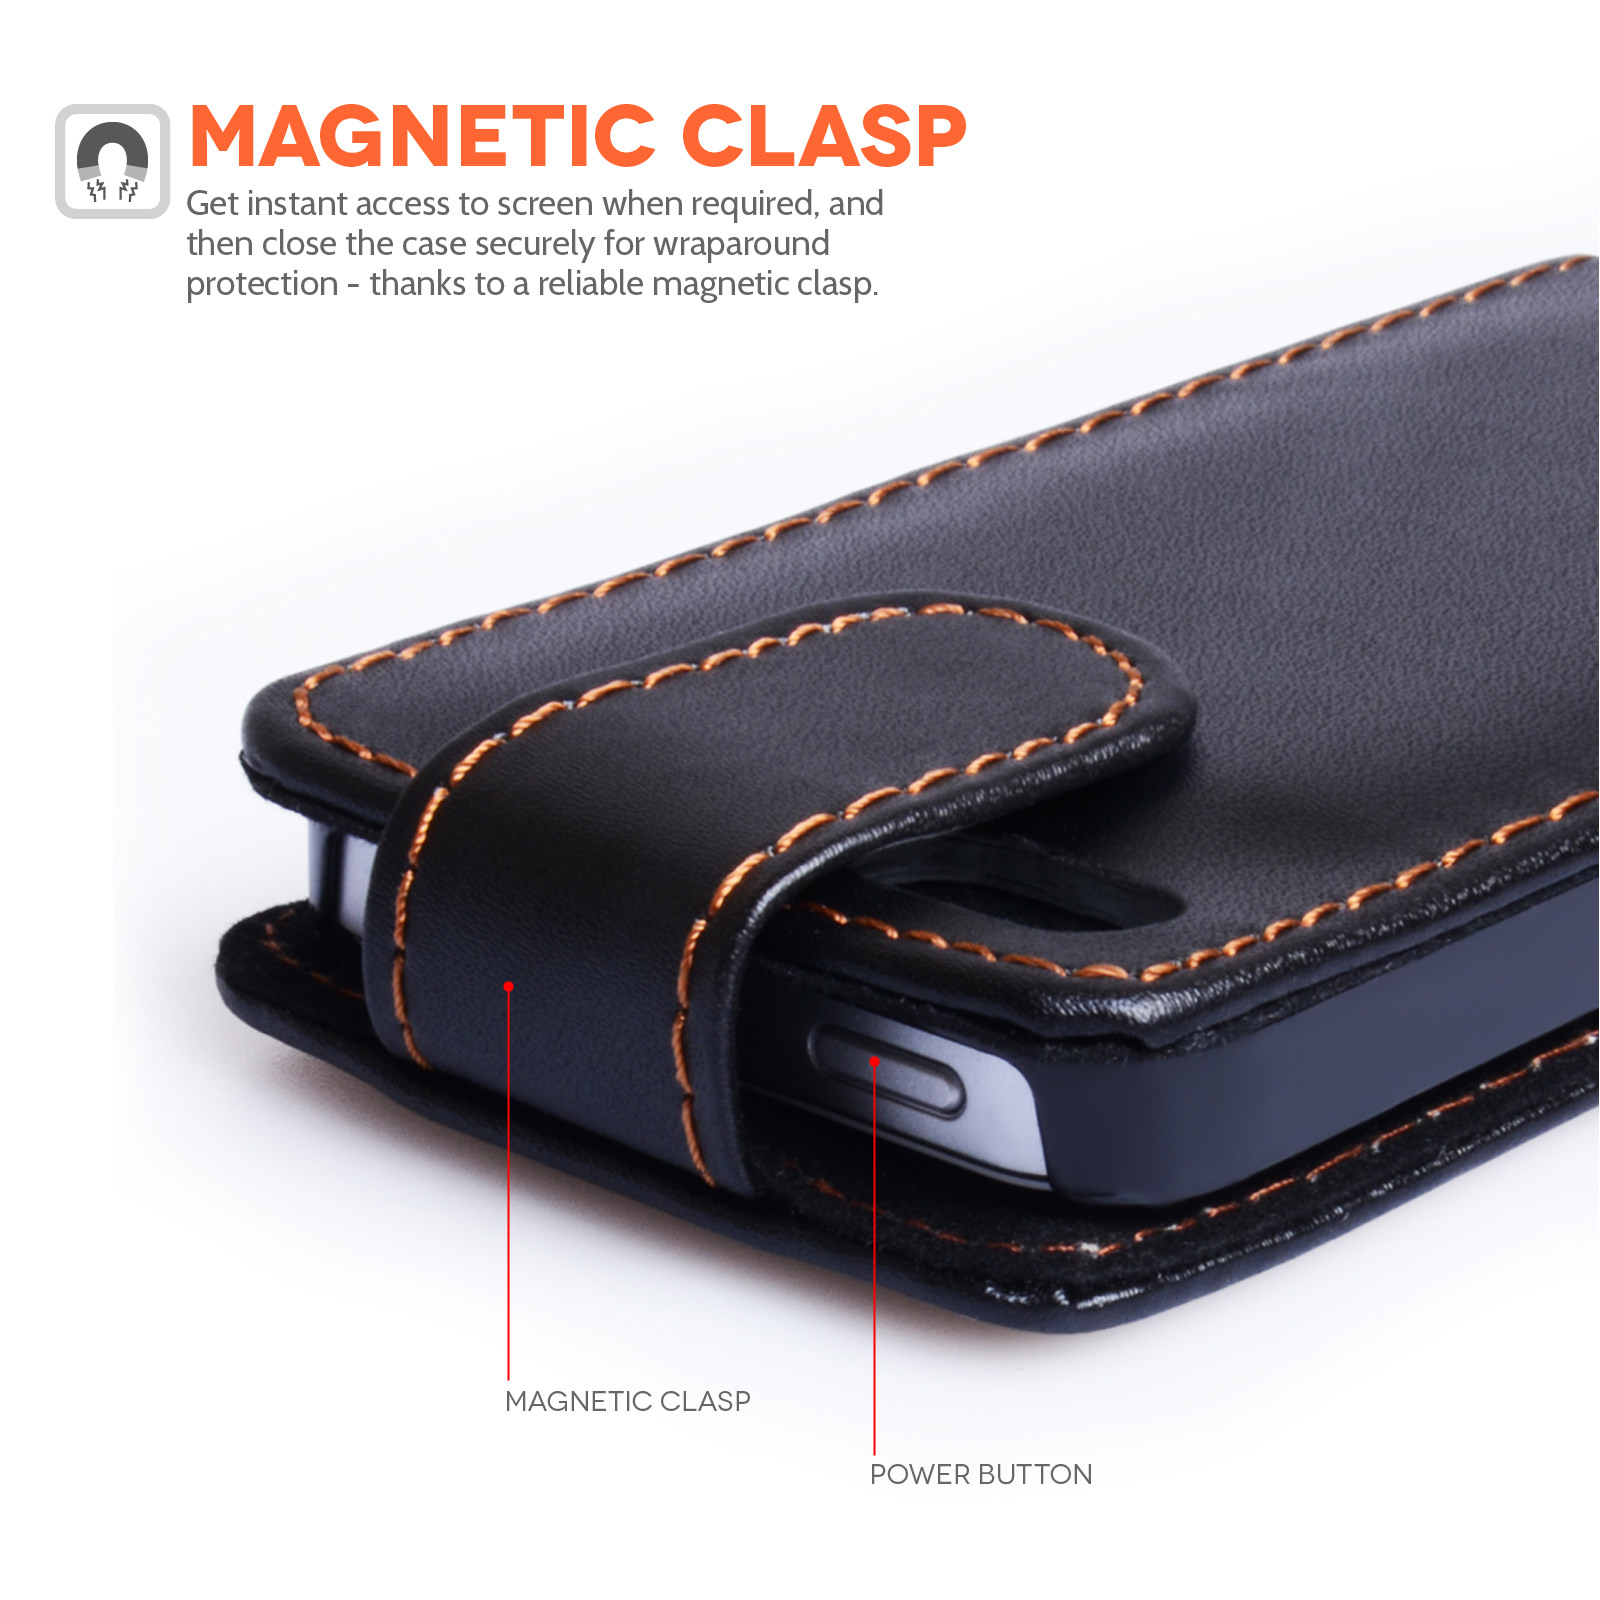 YouSave Accessories iPhone SE Leather Effect Flip Case - Black